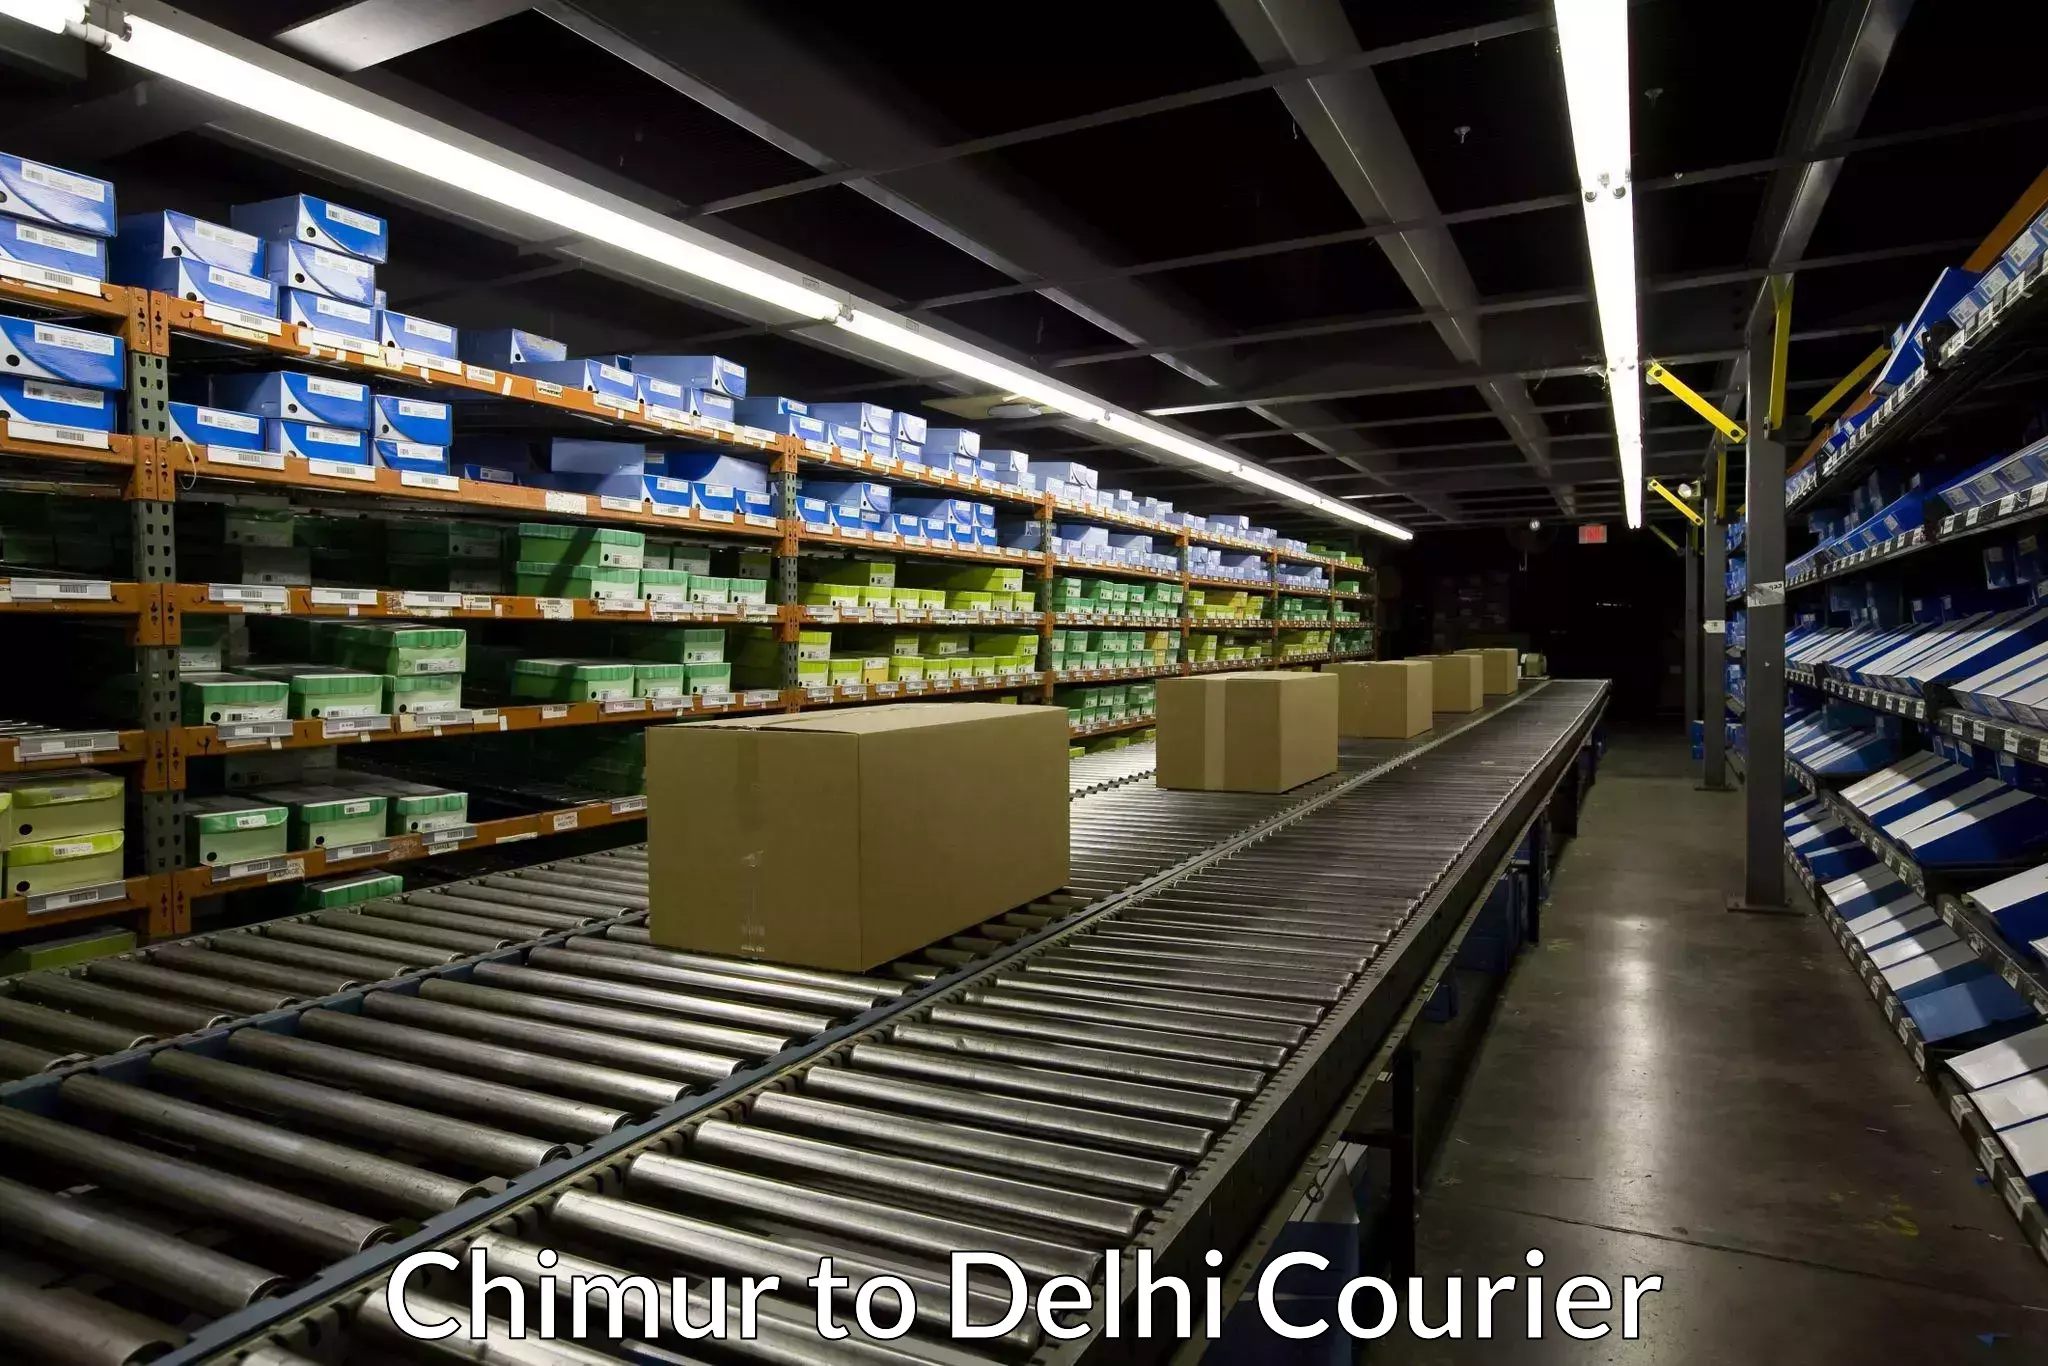 Express delivery capabilities Chimur to Jawaharlal Nehru University New Delhi